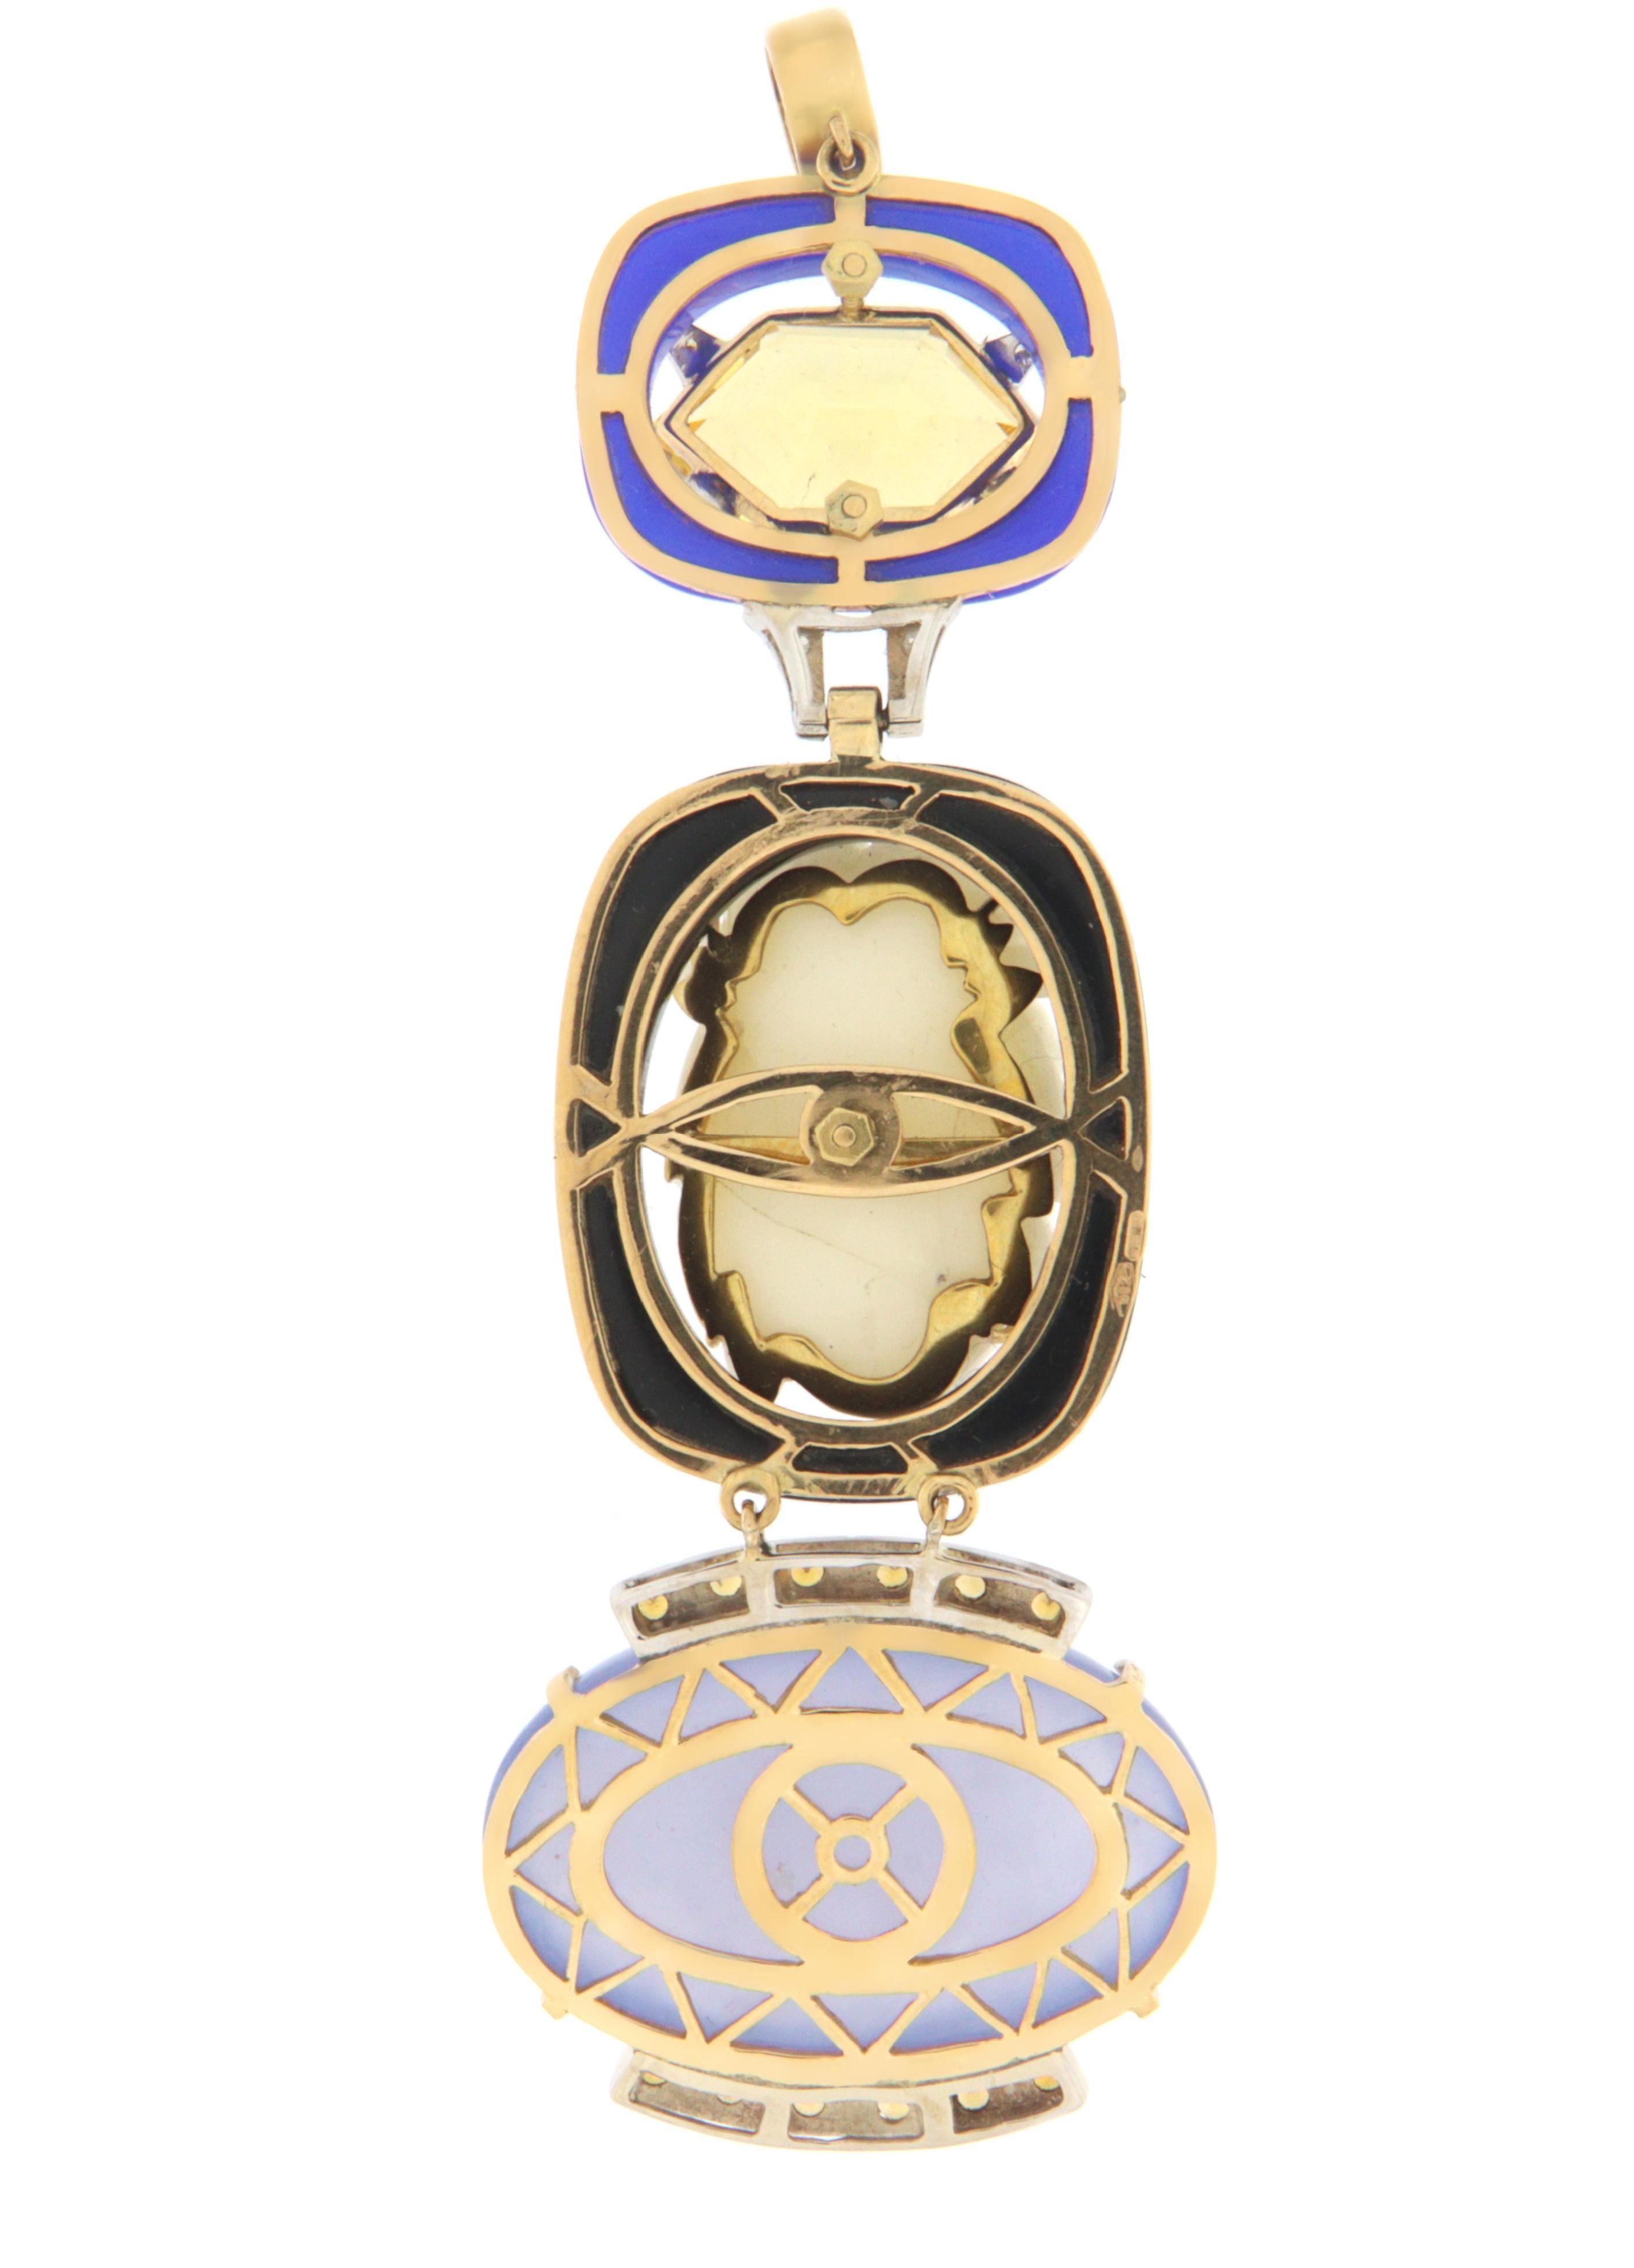 Brilliant Cut Coral Cameo Diamonds Citrine 18 Karat Yellow Gold Pendant Necklace For Sale